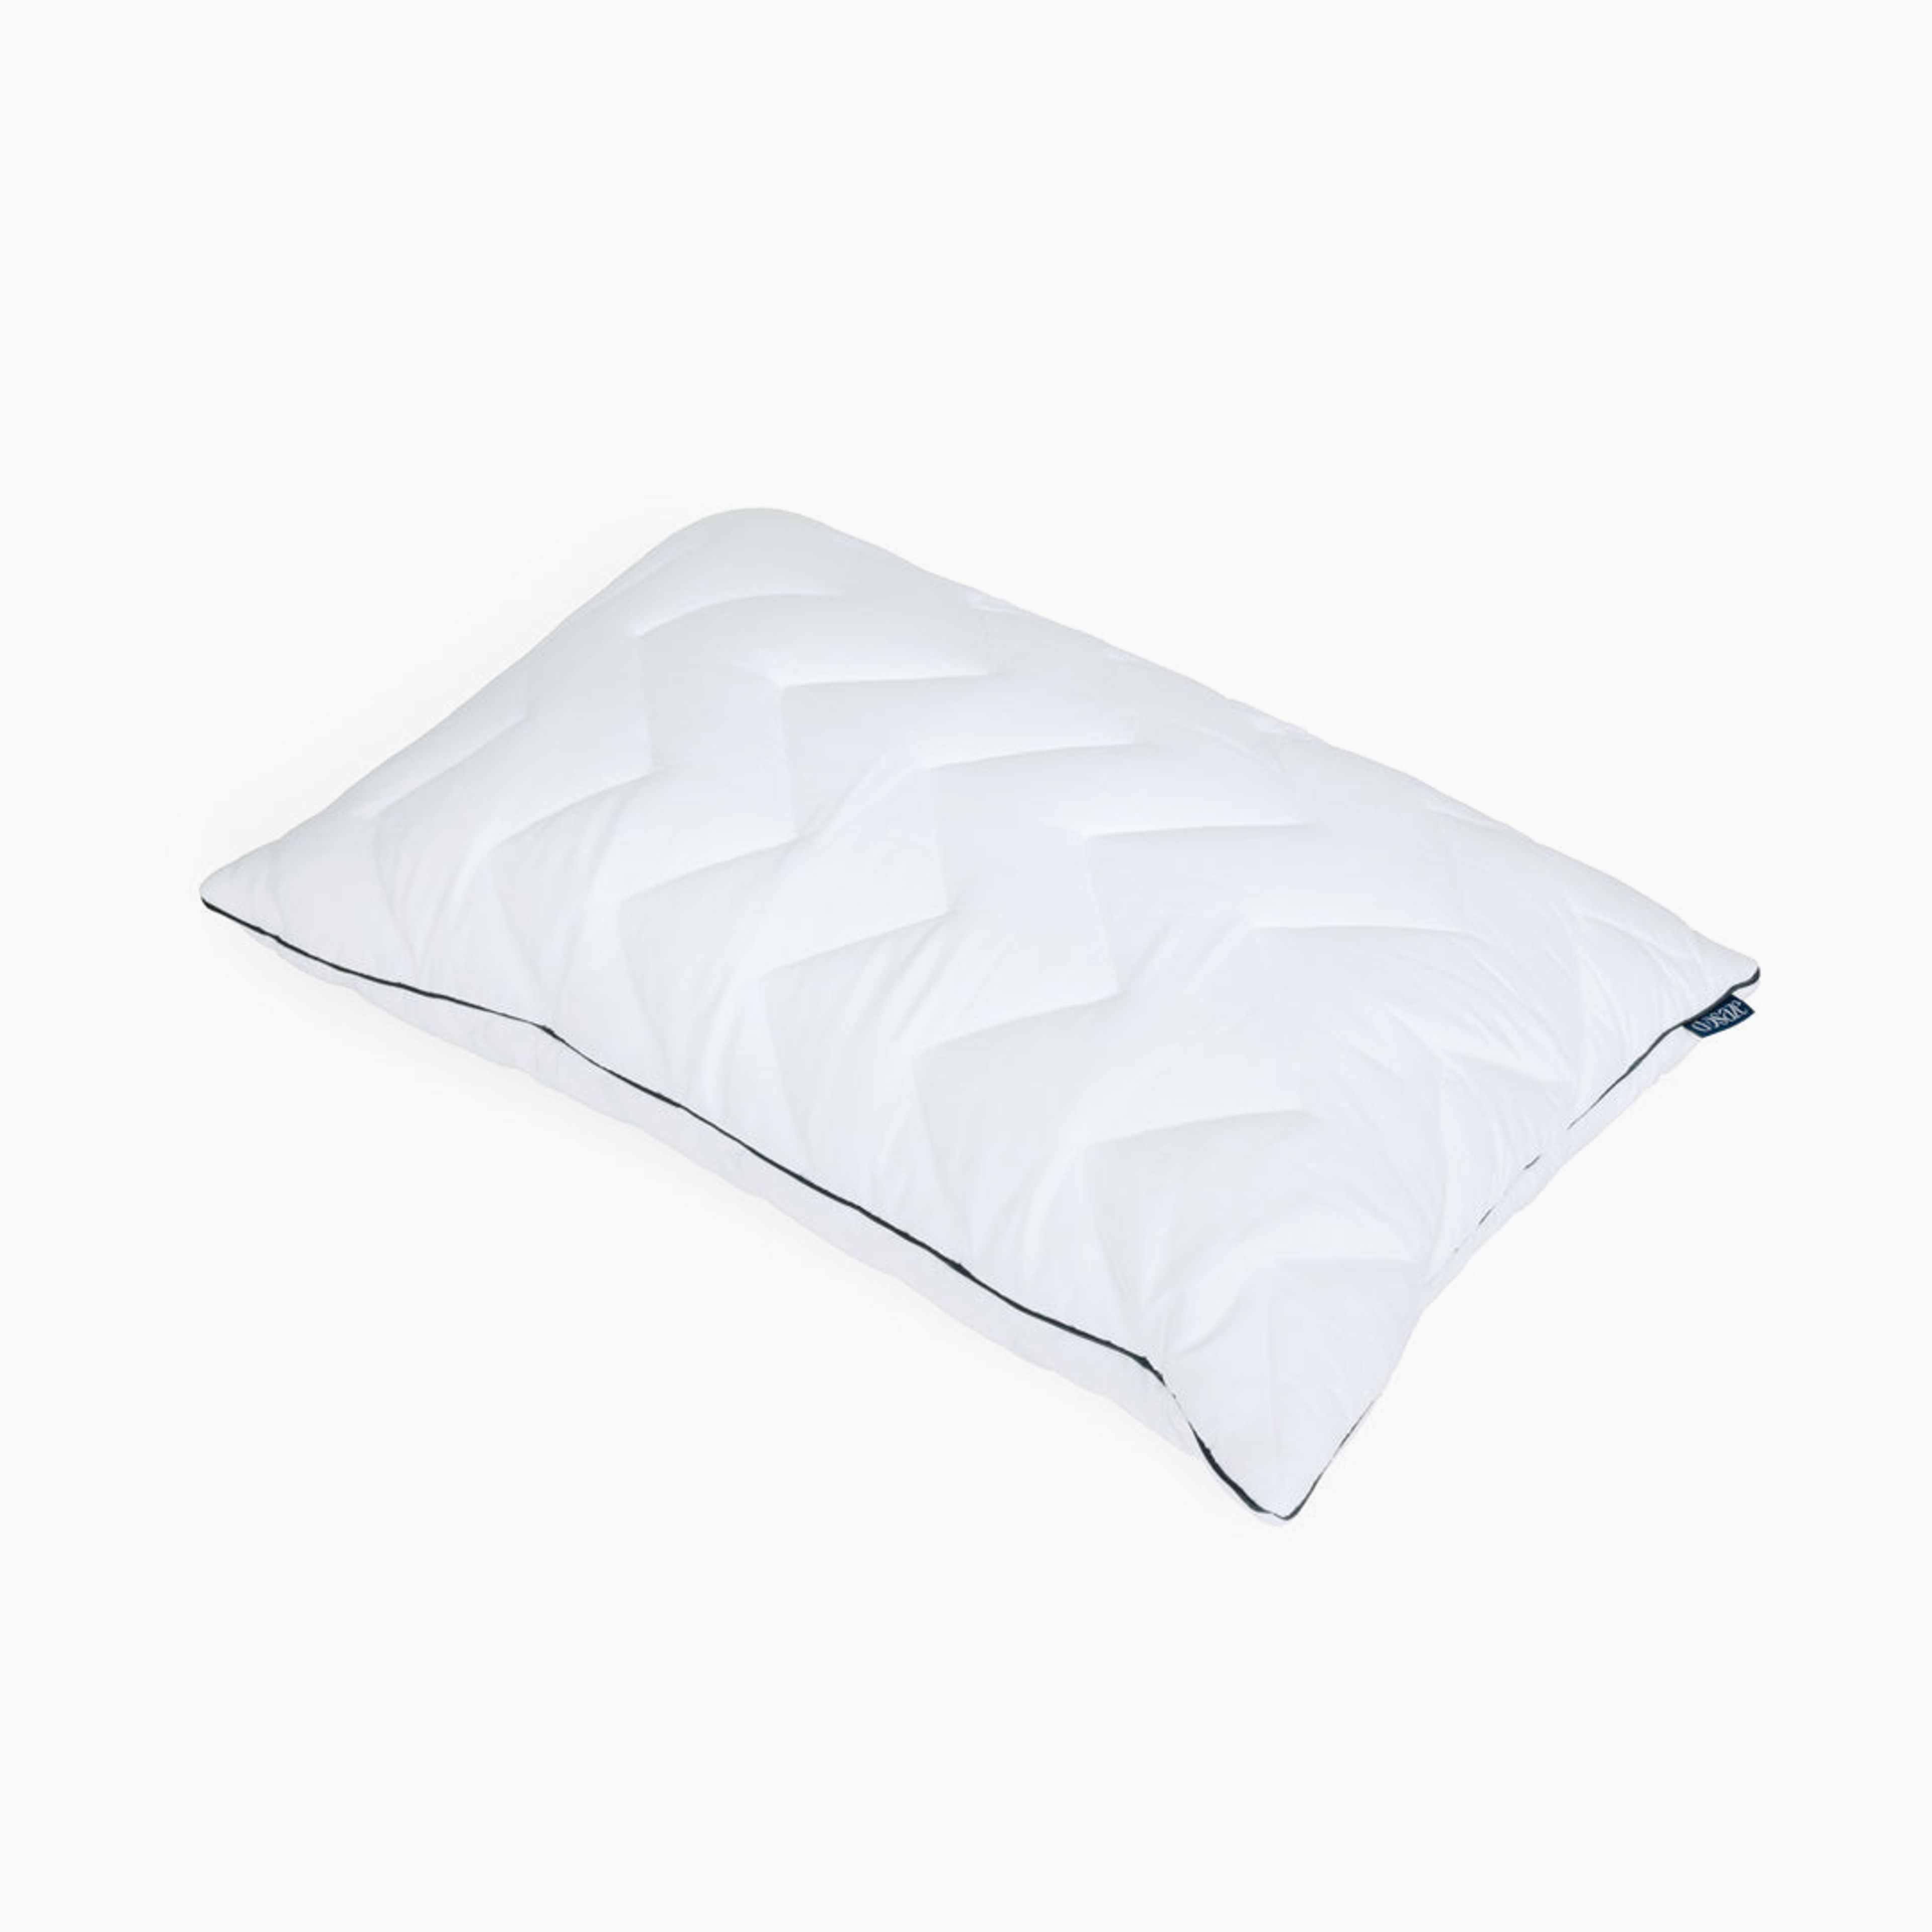 Dosaze Cool Sleep Pillow